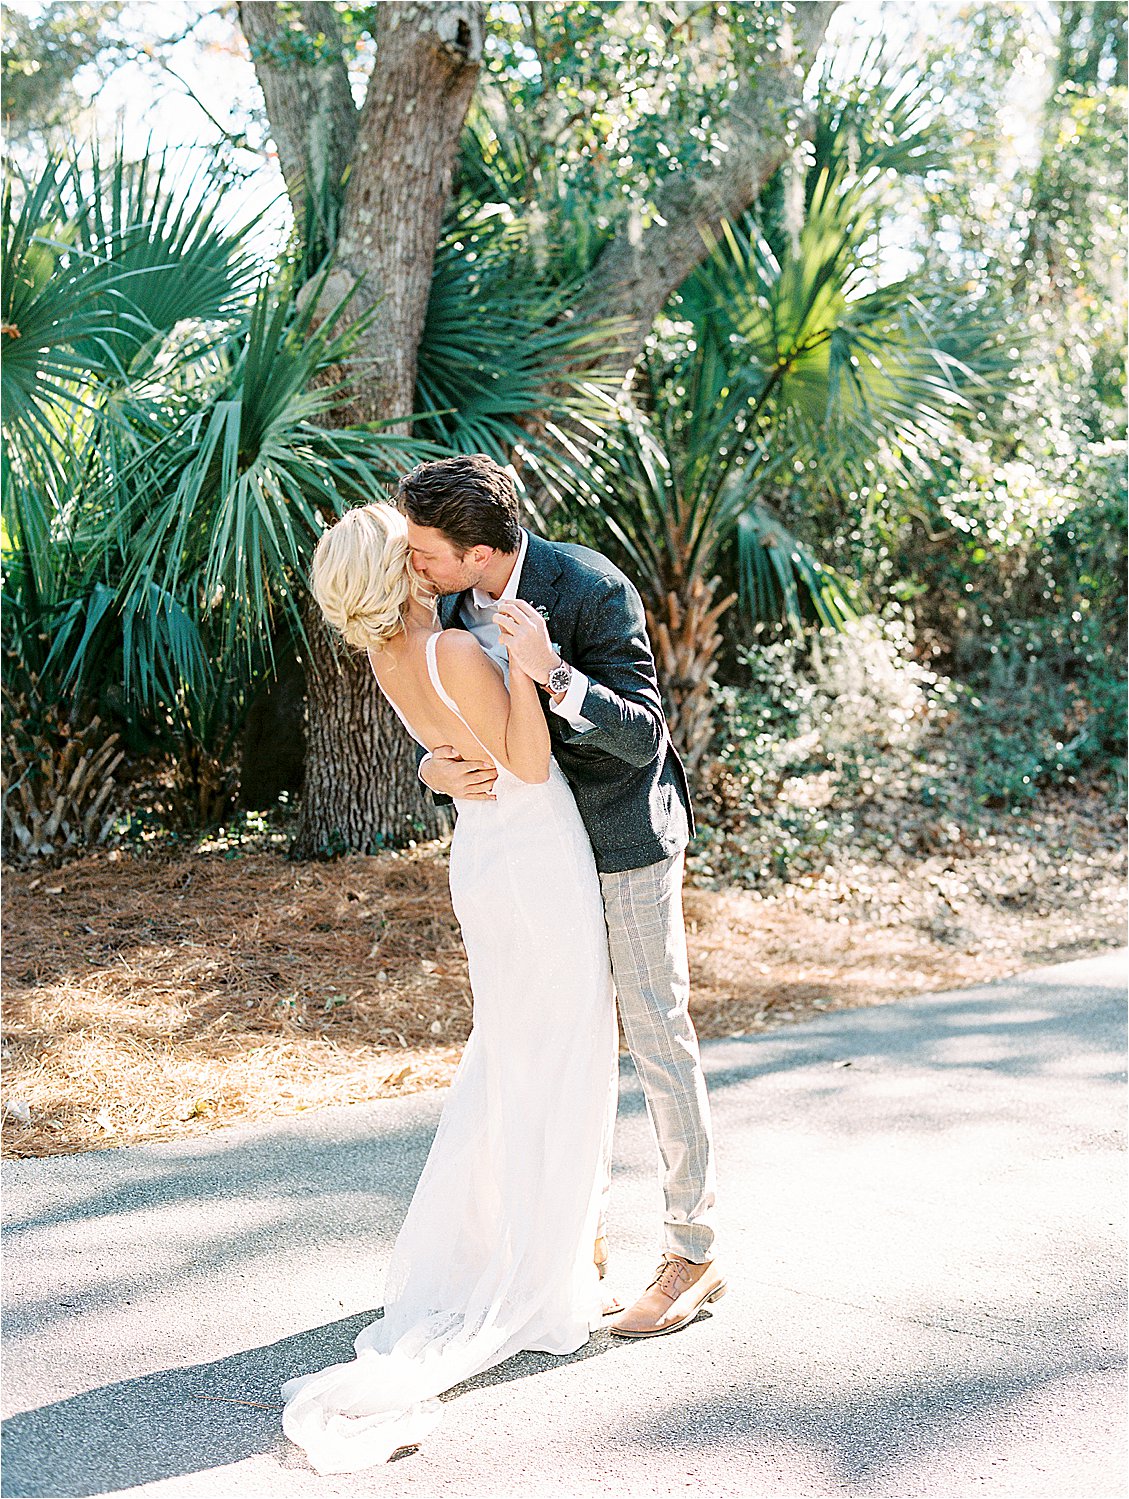 Backless Wedding Dress at Pastel Spring Kiawah Island Wedding Inspiration with Charleston + Destination Film Wedding Photographer, Renee Hollingshead